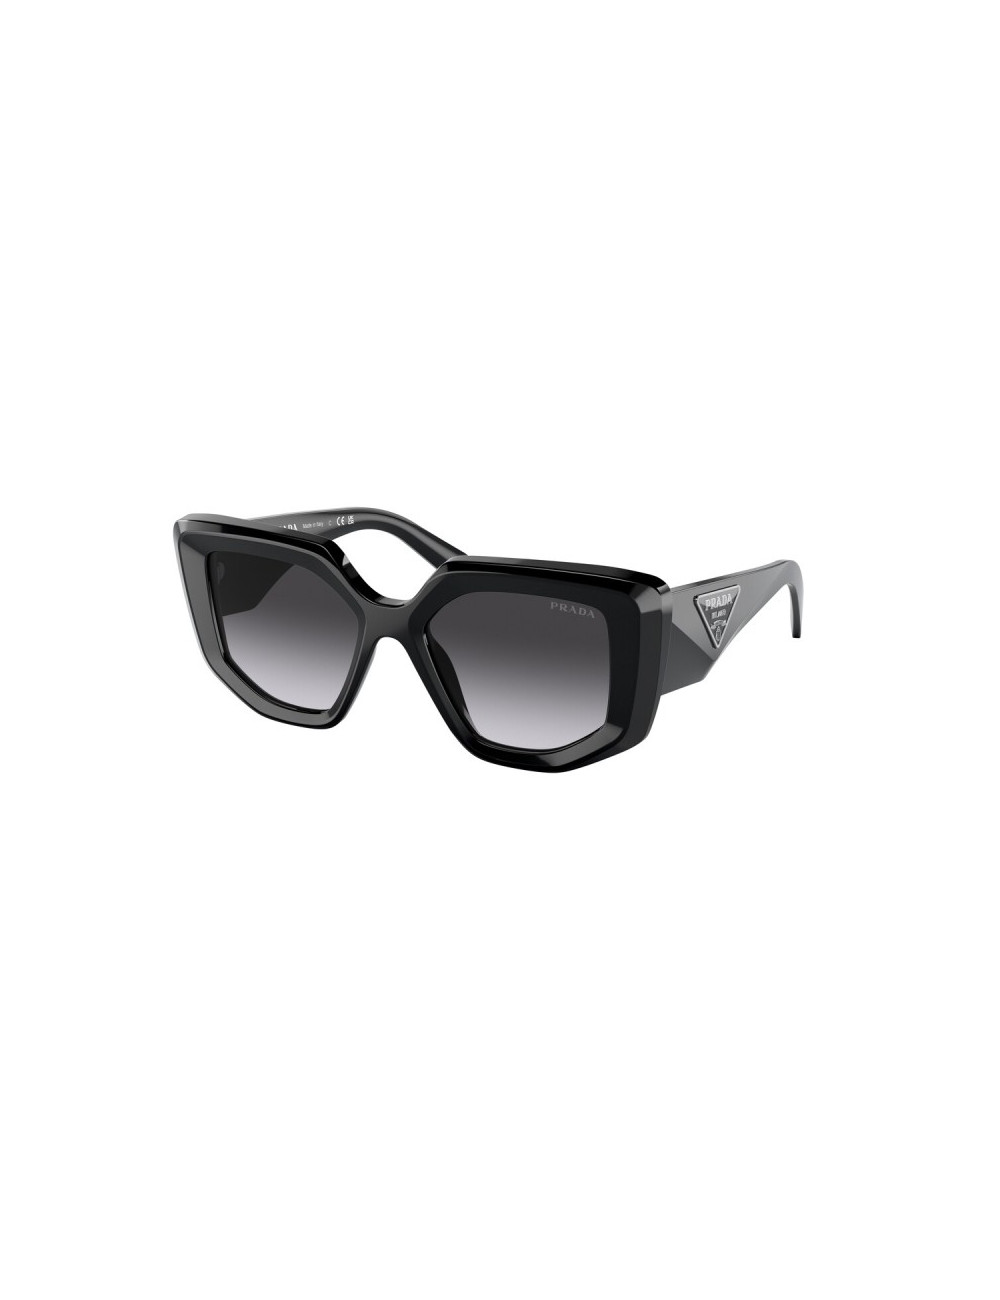 Prada Sunglasses 2021 | Girl with sunglasses, Prada glasses, Prada  sunglasses-mncb.edu.vn